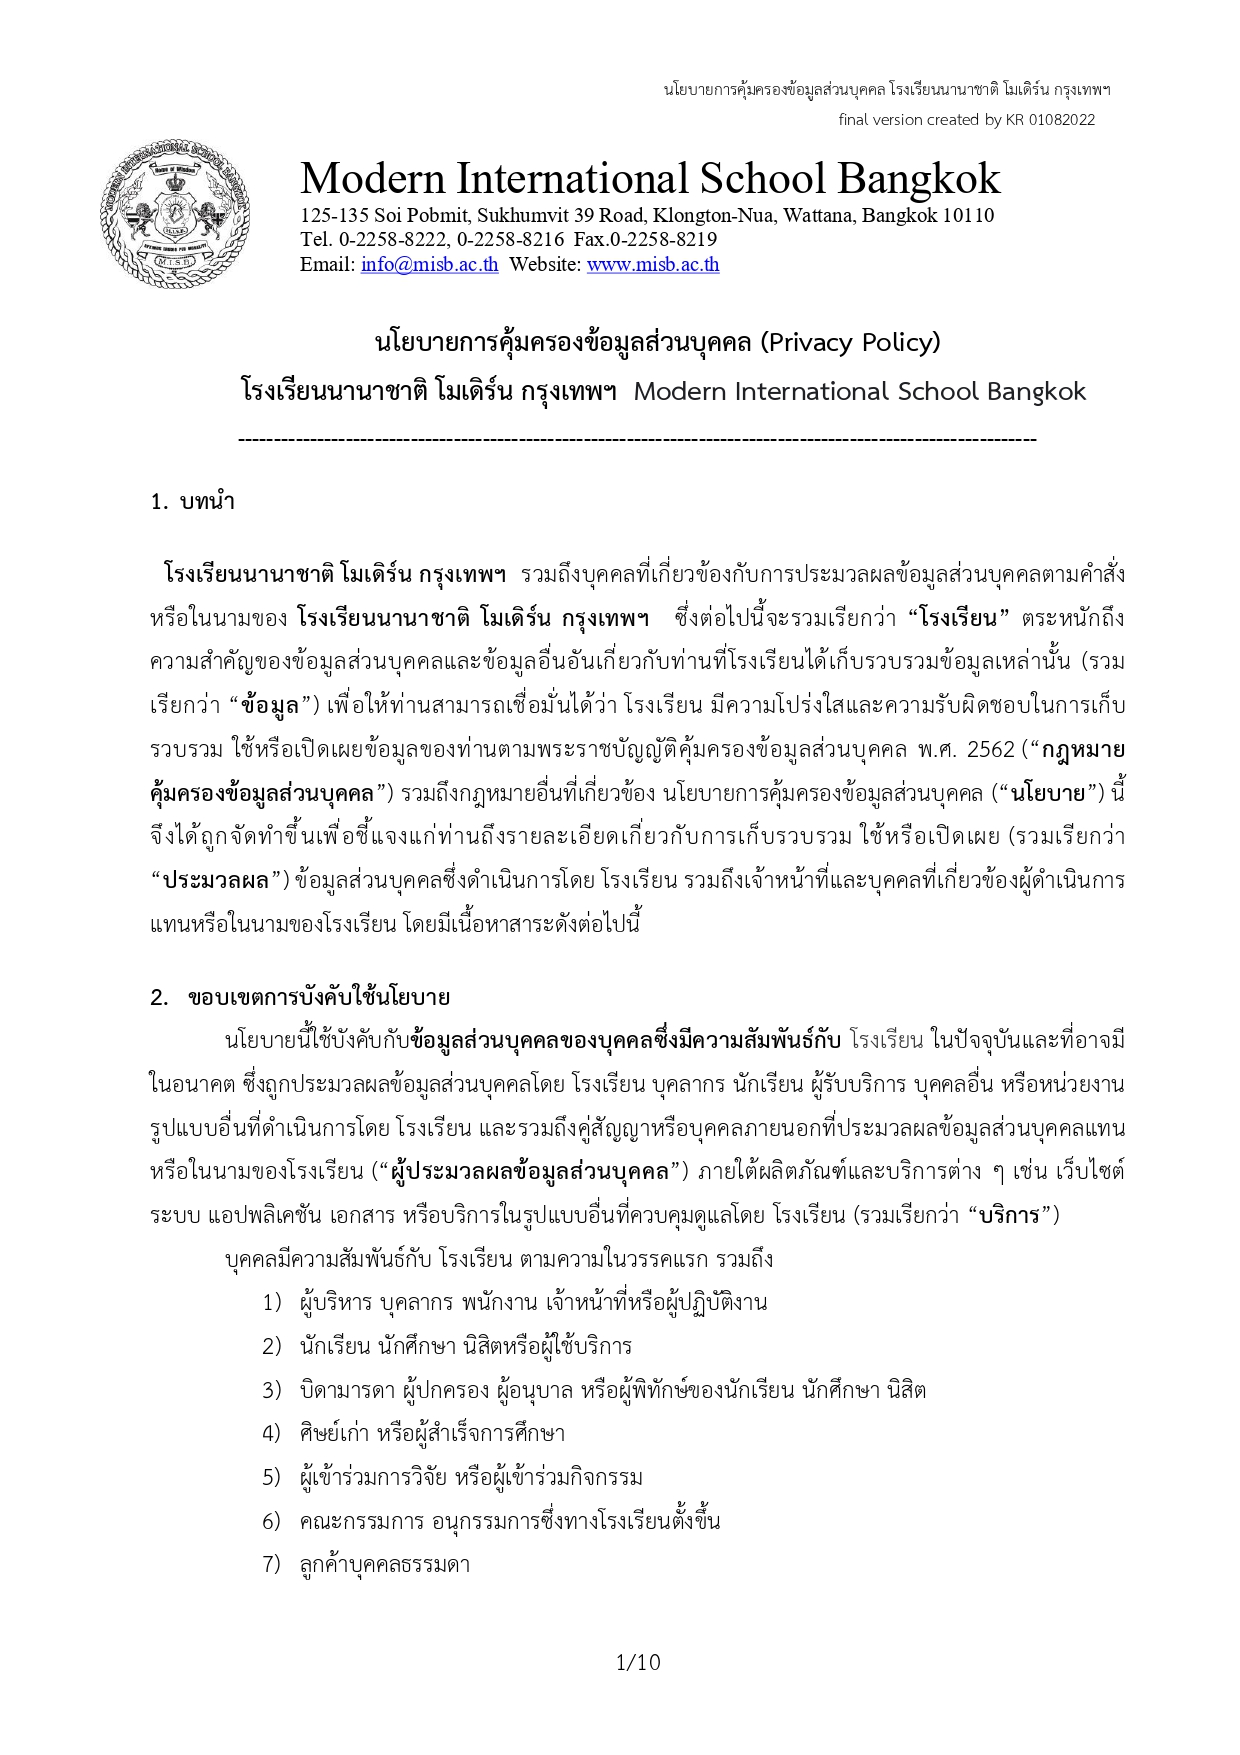 PDPA MISB ภาษาไทย final version 01012566 ไม่ลงชื่อ page 0001